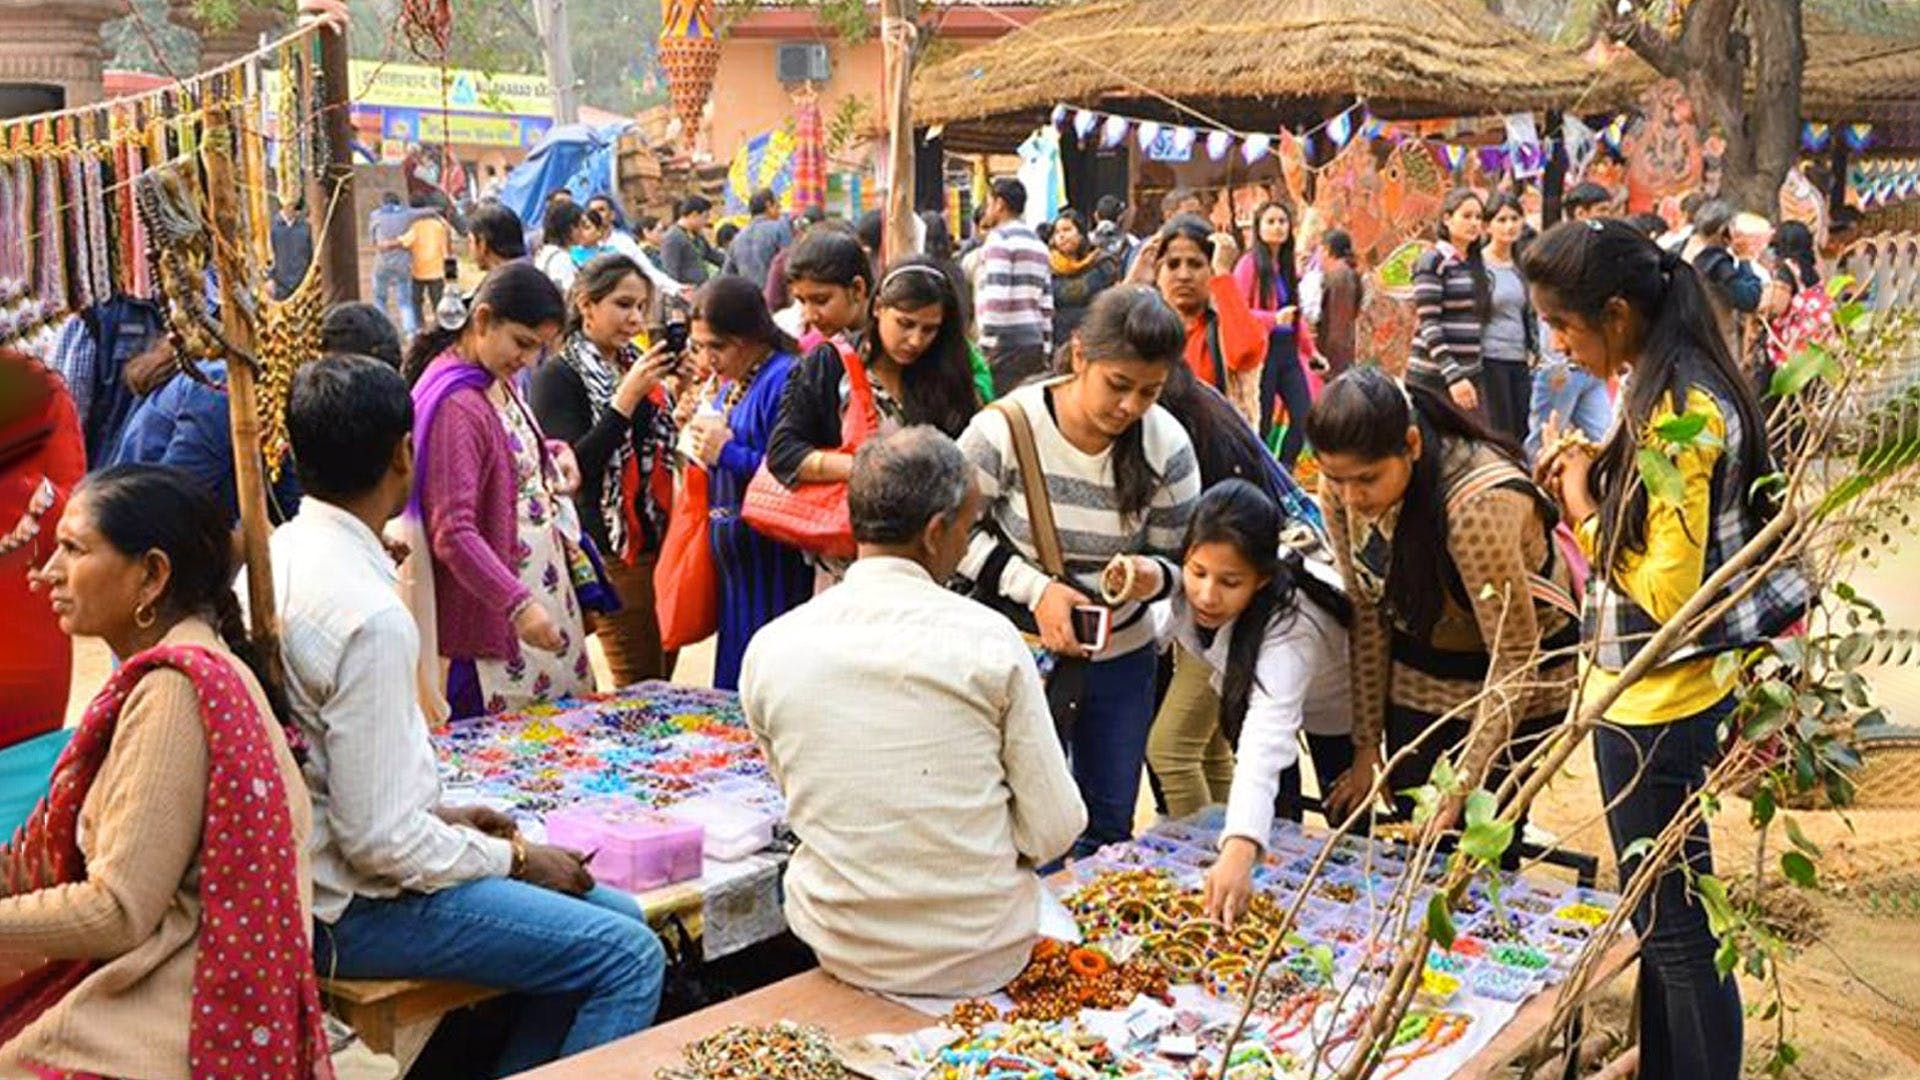 Marketplace,Selling,Market,Bazaar,Public space,Human settlement,City,Event,Stall,Flea market